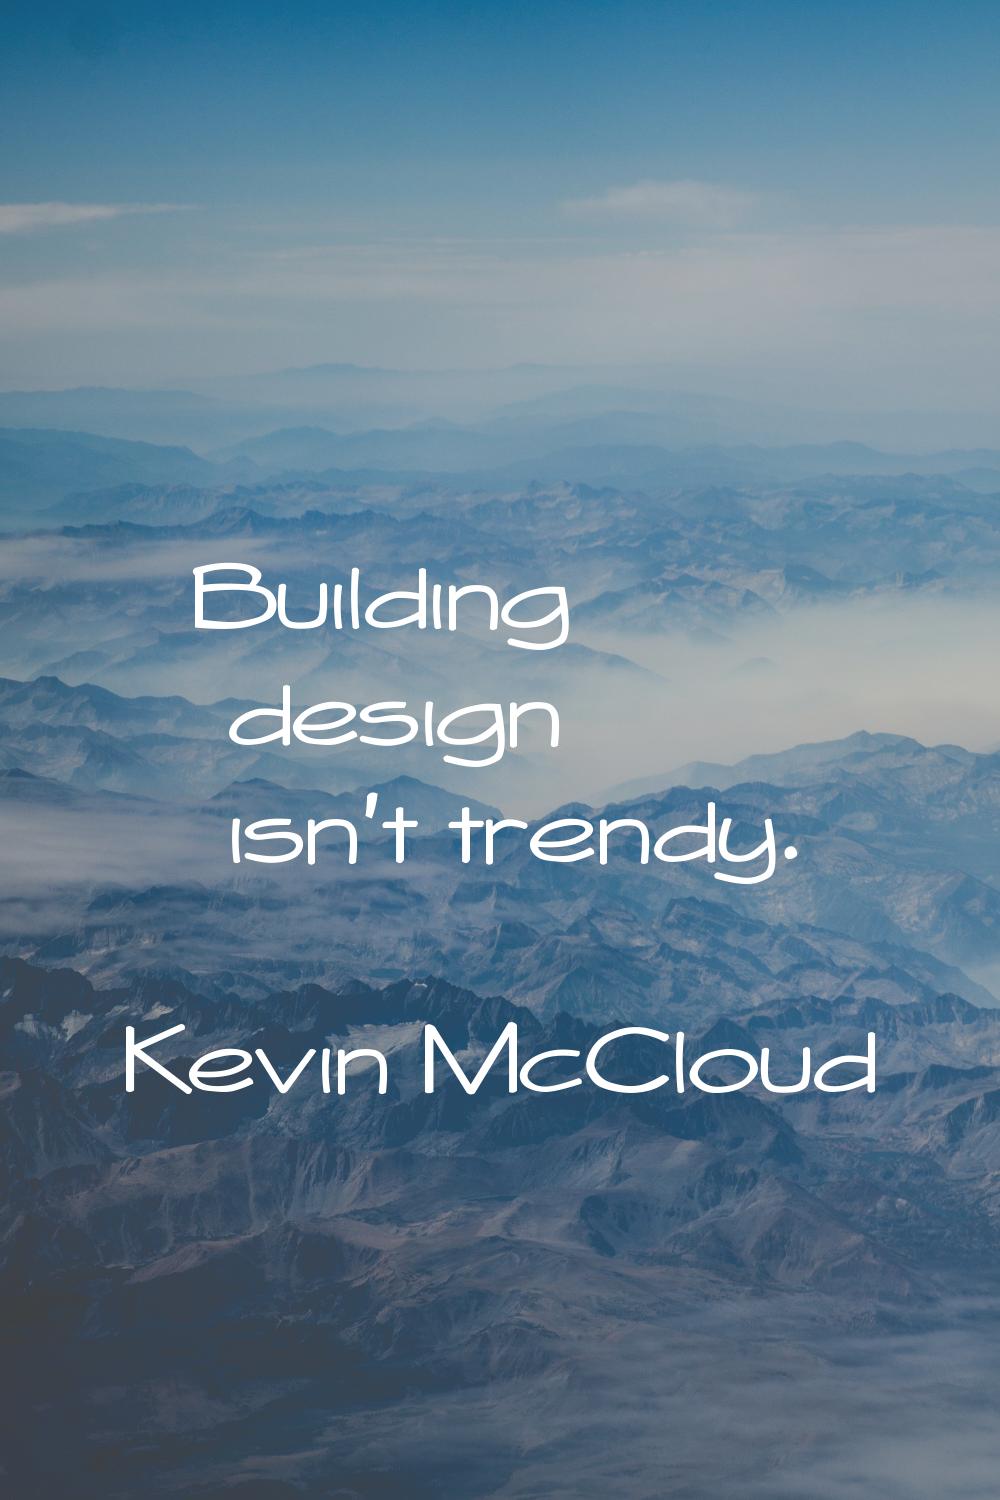 Building design isn't trendy.